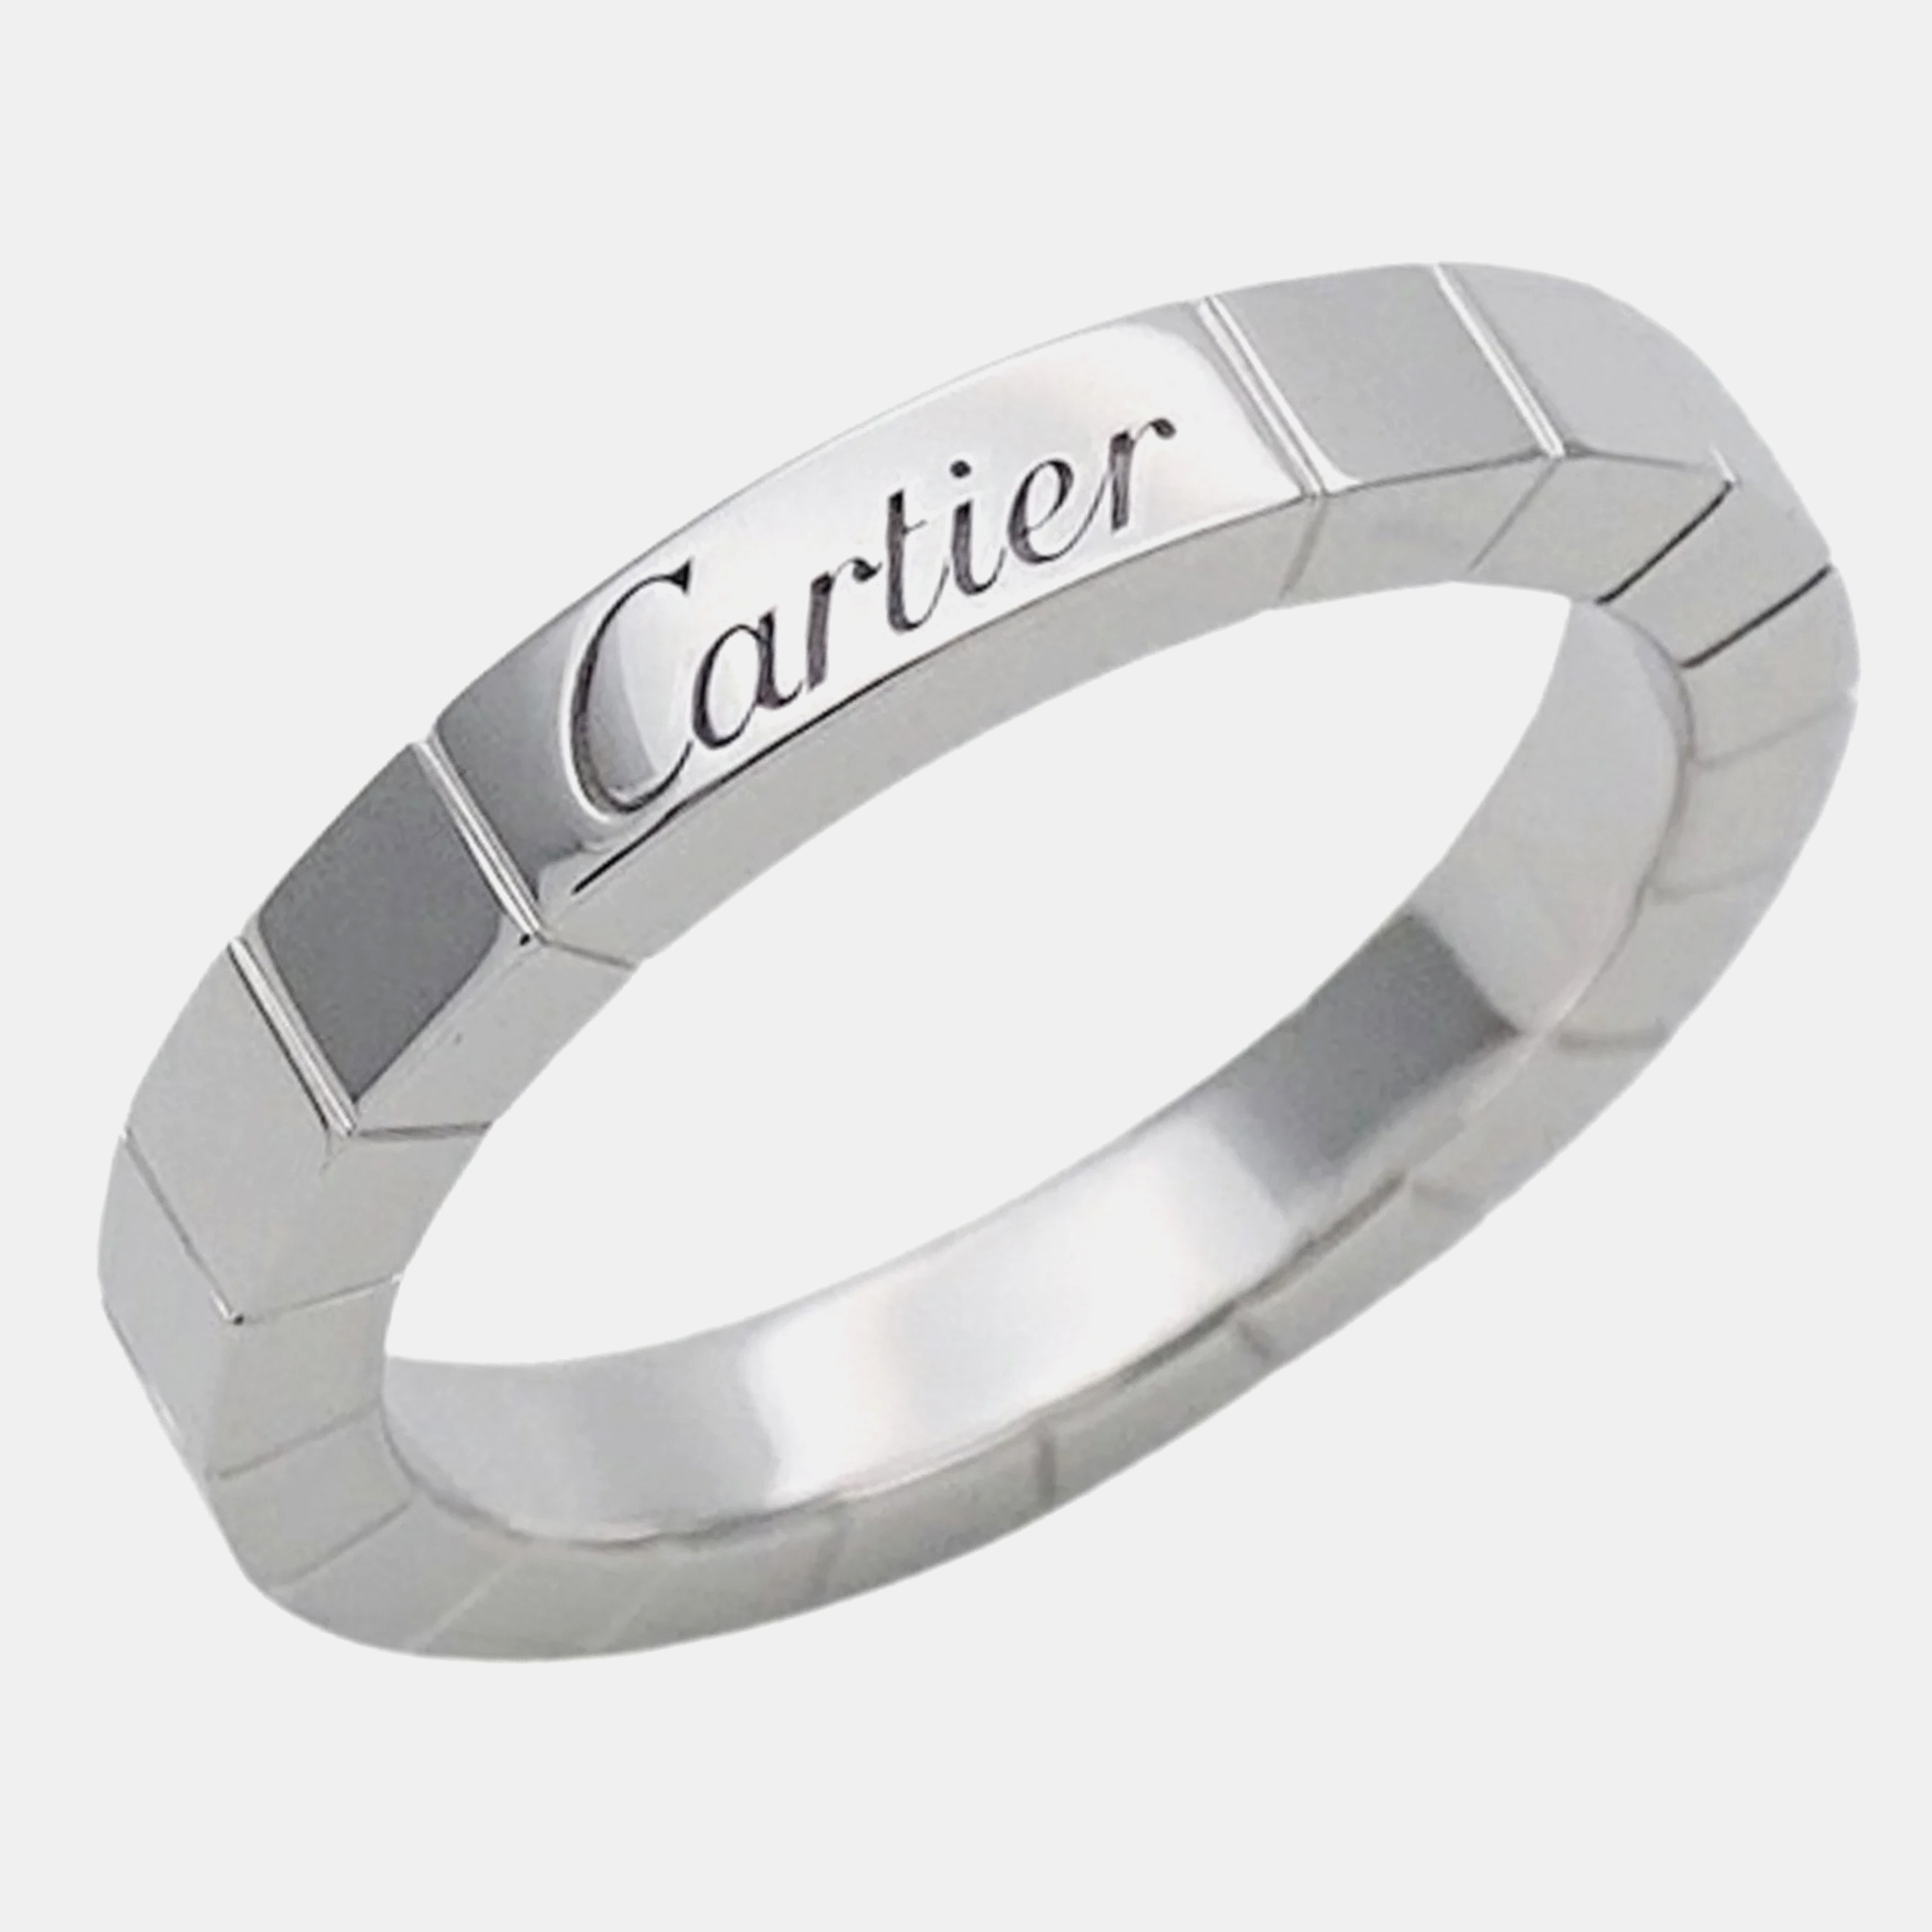 Cartier 18k white gold lanieres band ring eu 49